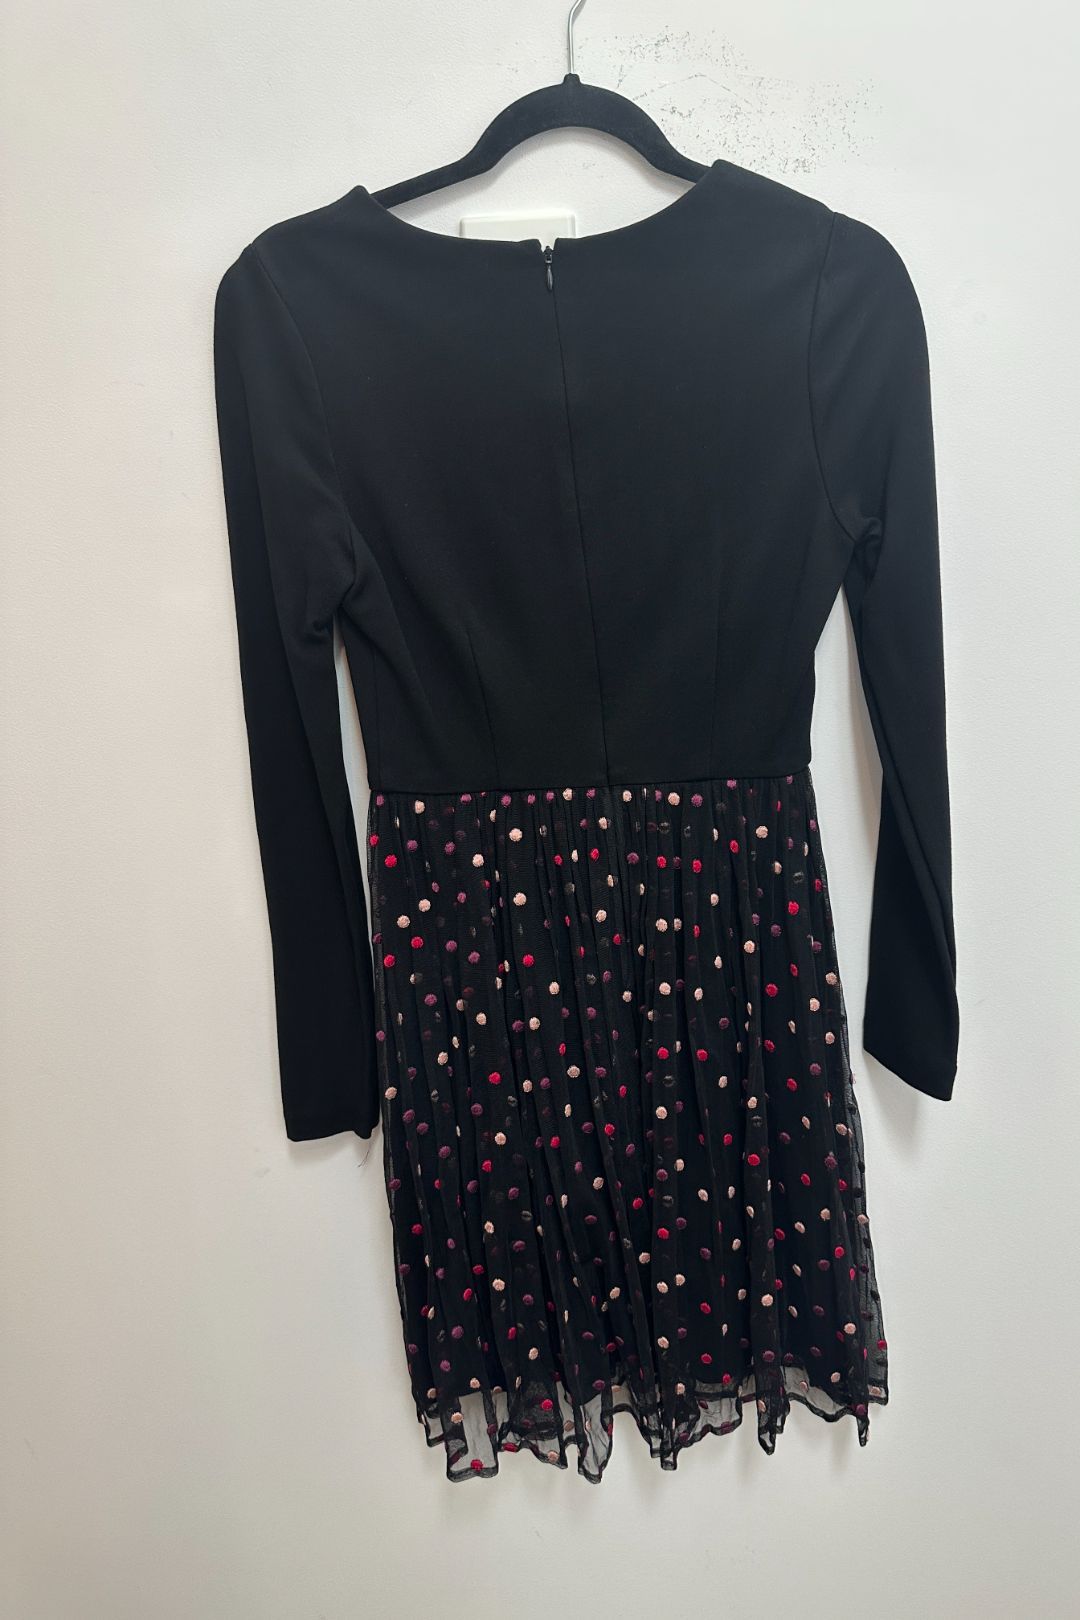 Alannah Hill - Black Dress with Polka Dot Tulle Skirt